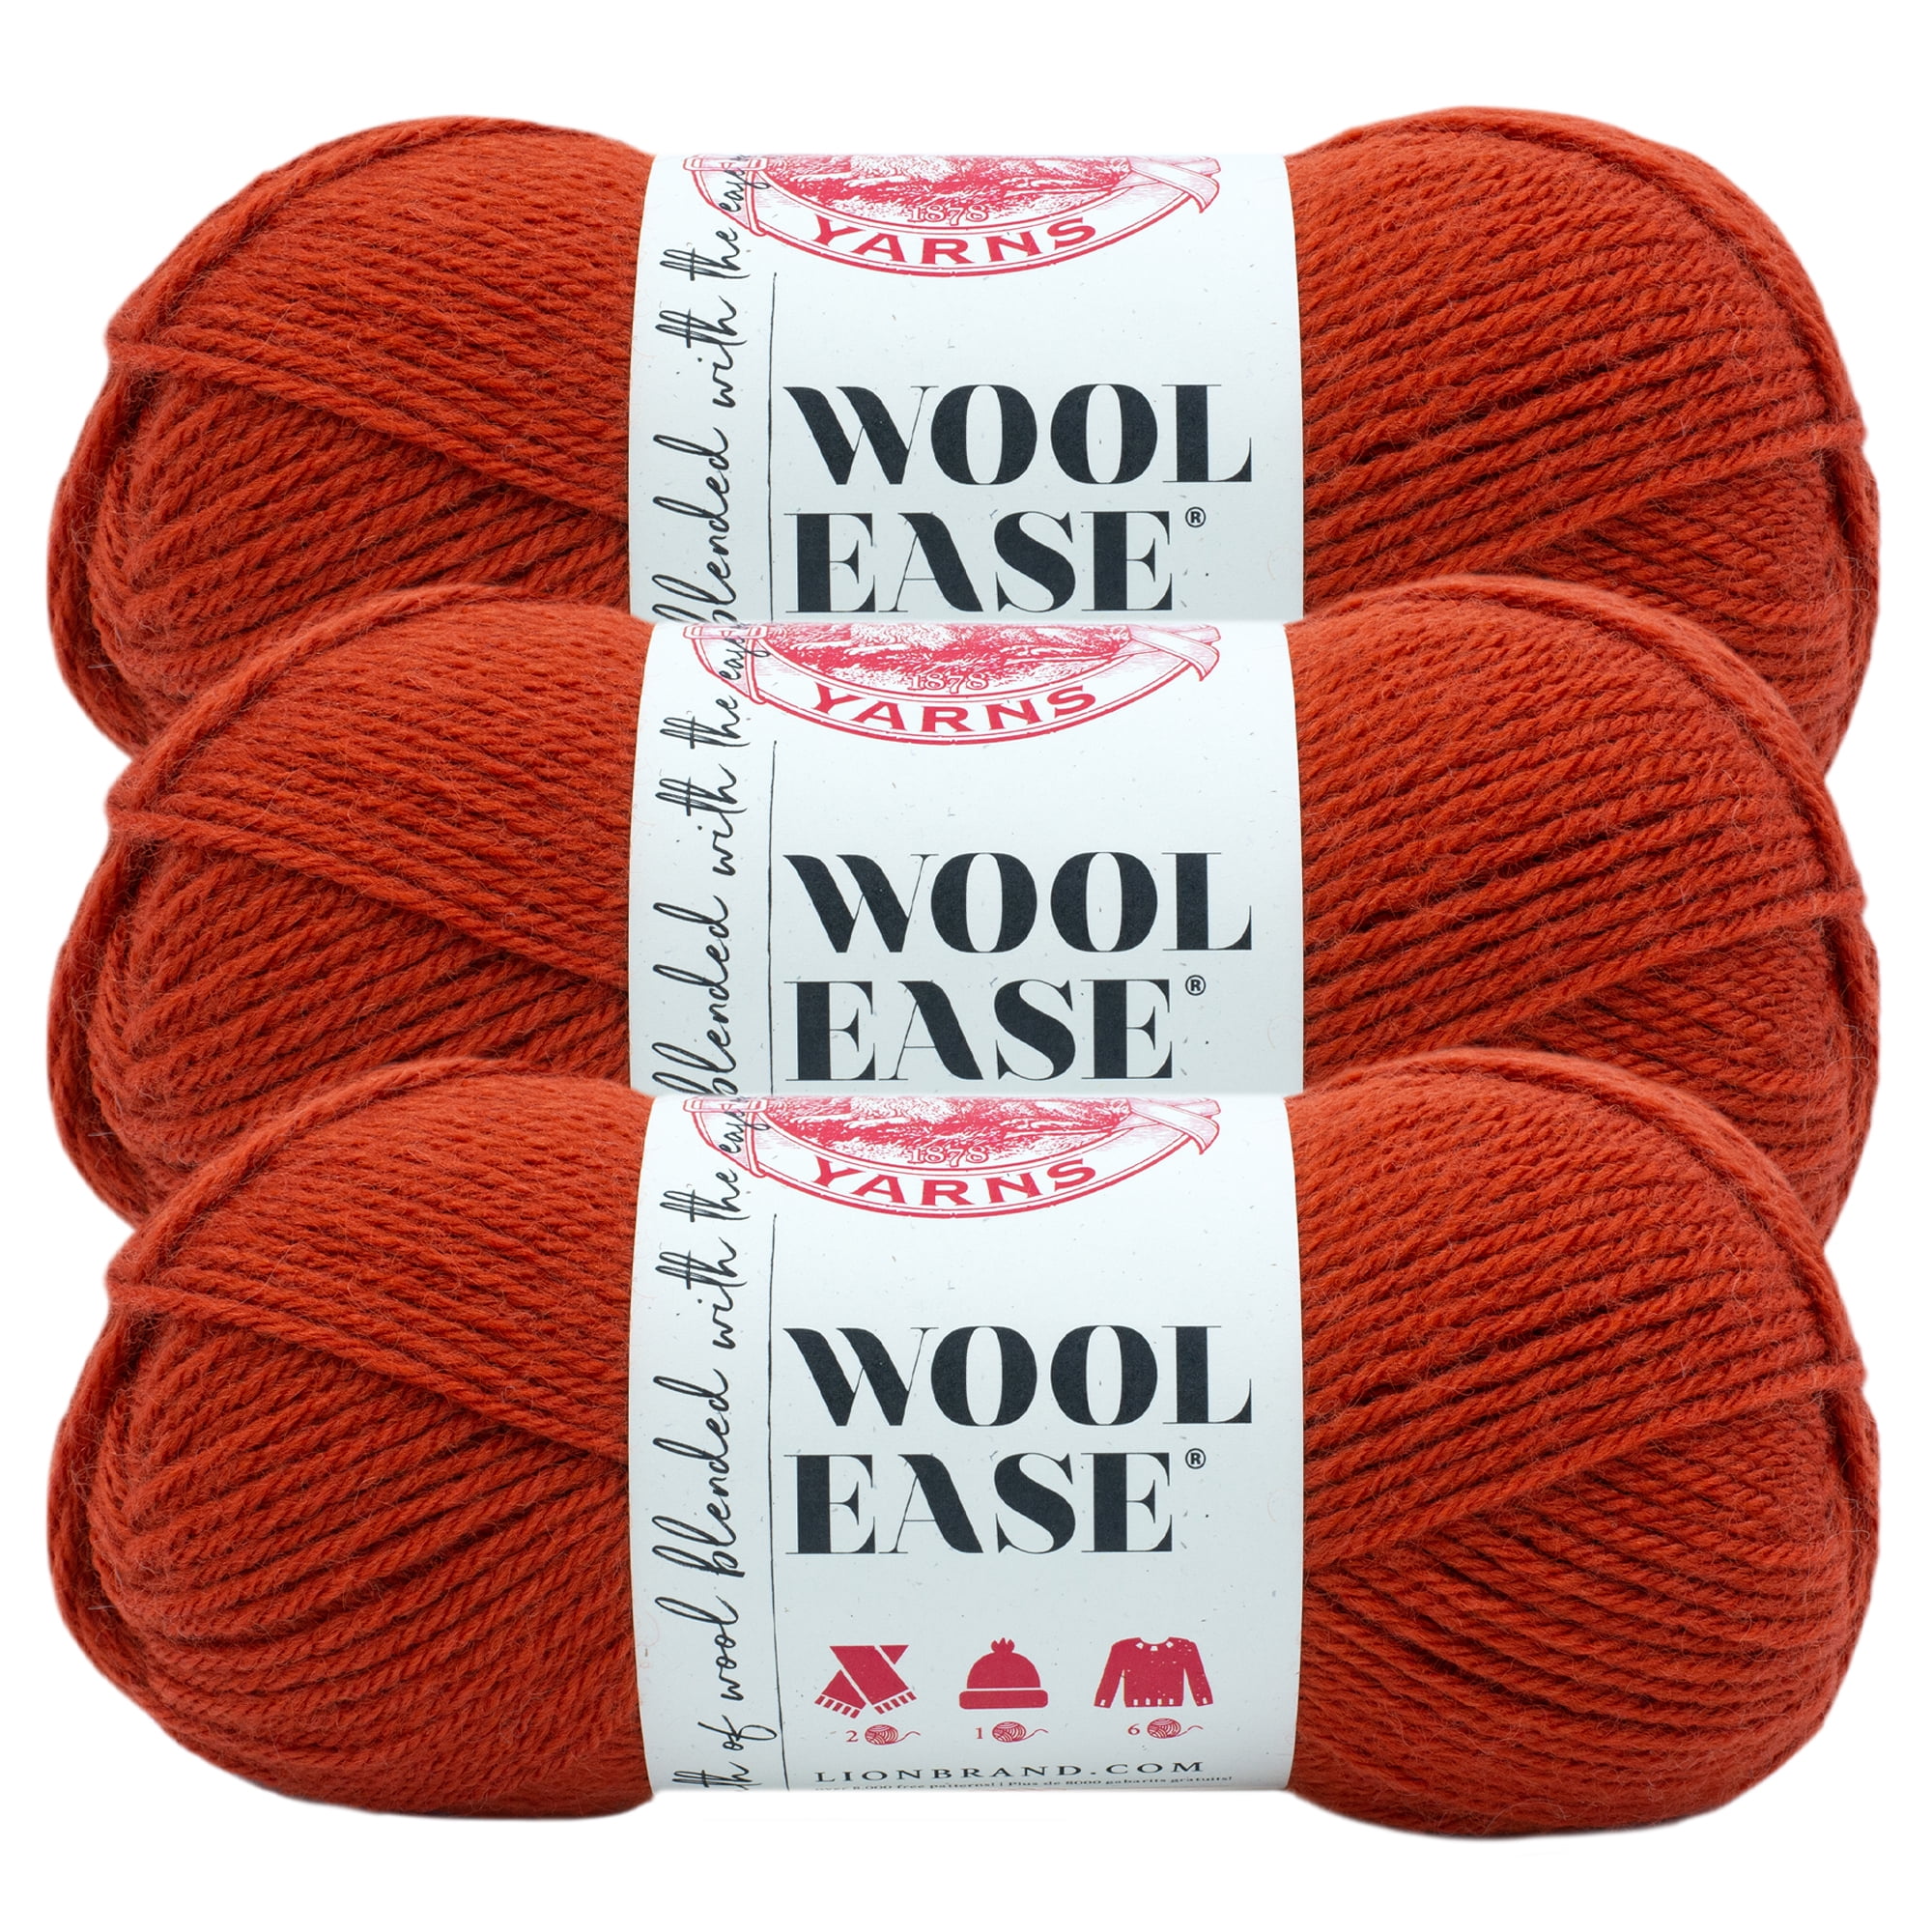  Lion Brand Yarn Wool-Ease Yarn Koi 620-033 (3-Skein) Same  Dyelot Worsted Medium #4 Soft Knitting Yarn 80% Acrylic/20% Wool Bundle